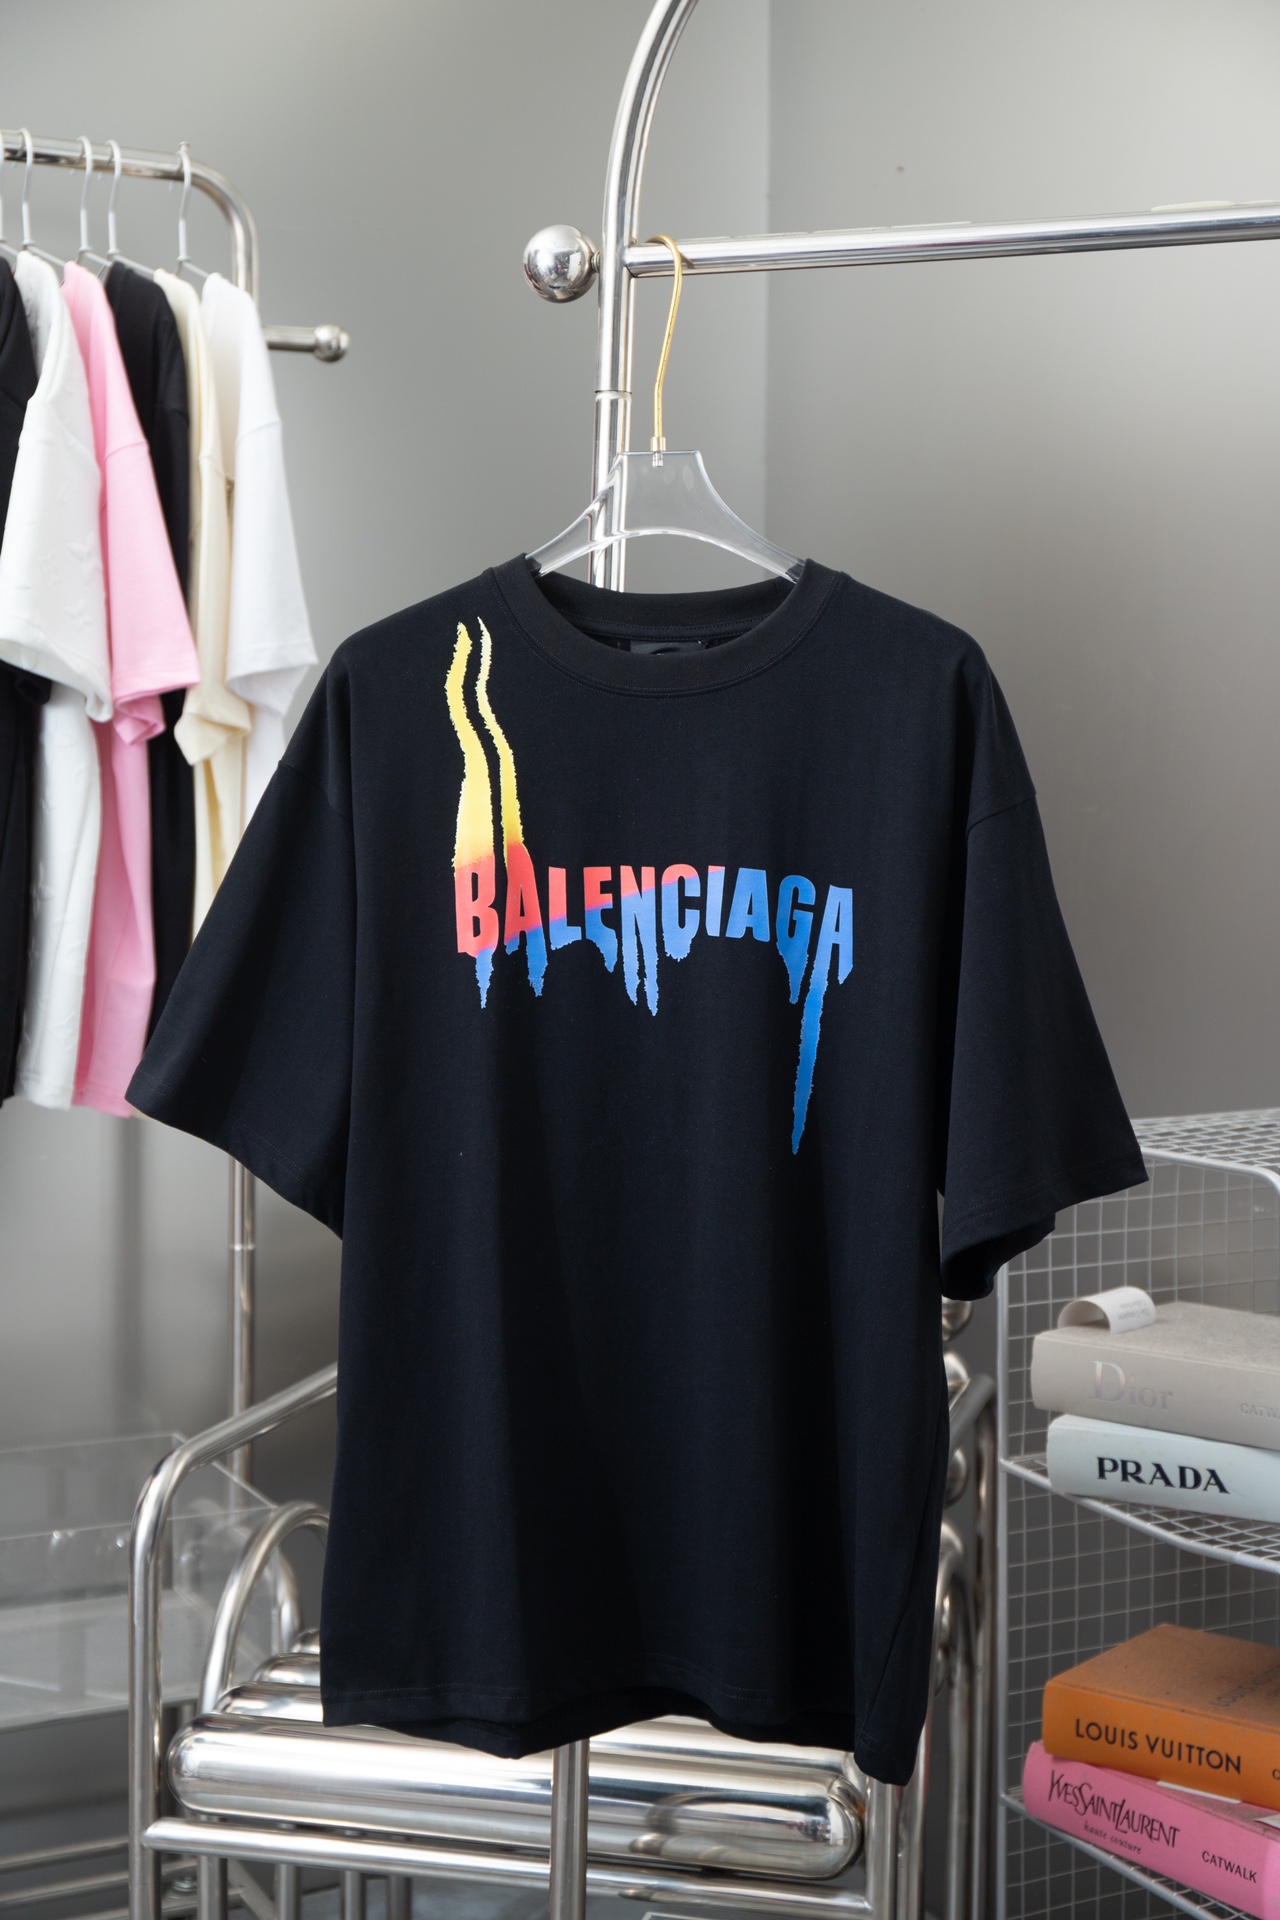 Balenciaga Clothing T-Shirt Doodle Unisex Cotton Spring Collection Fashion Short Sleeve